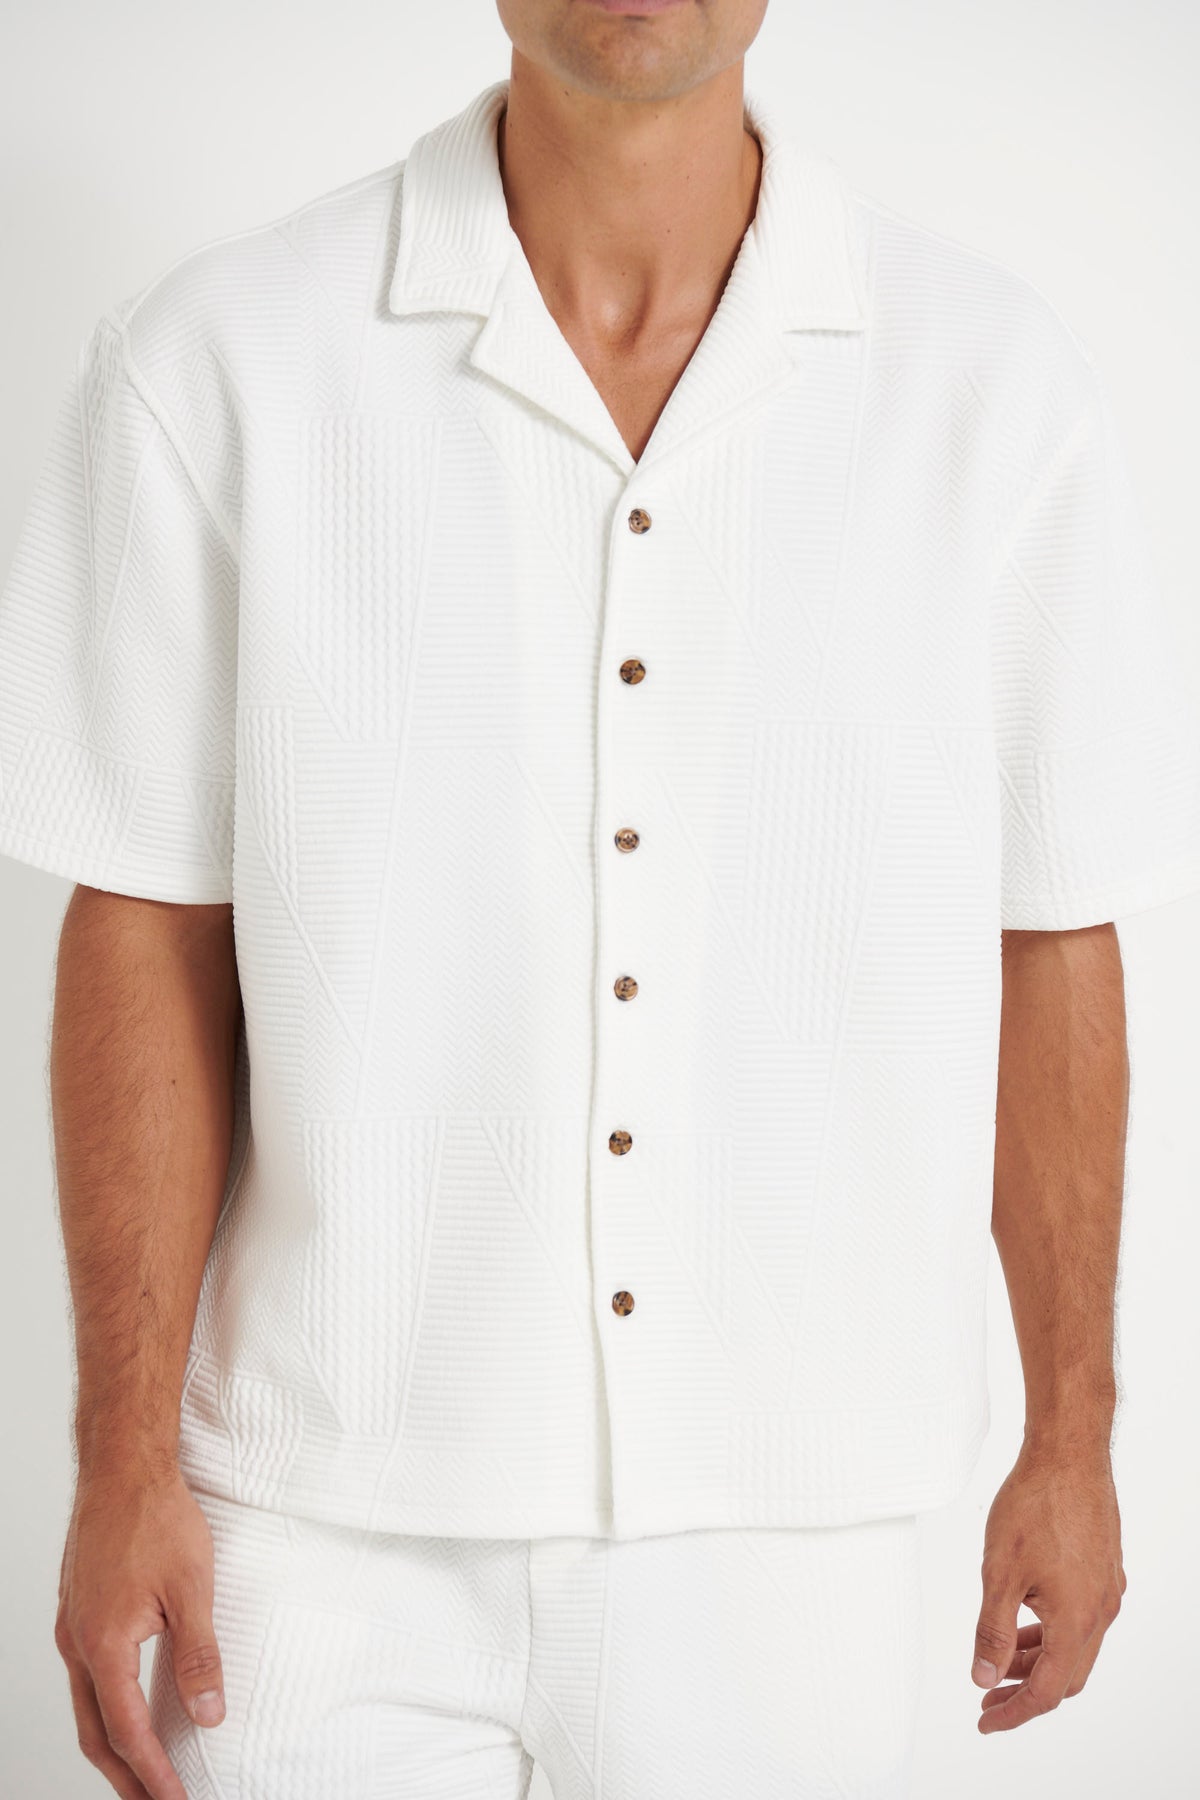 Noah Texture Shirt White